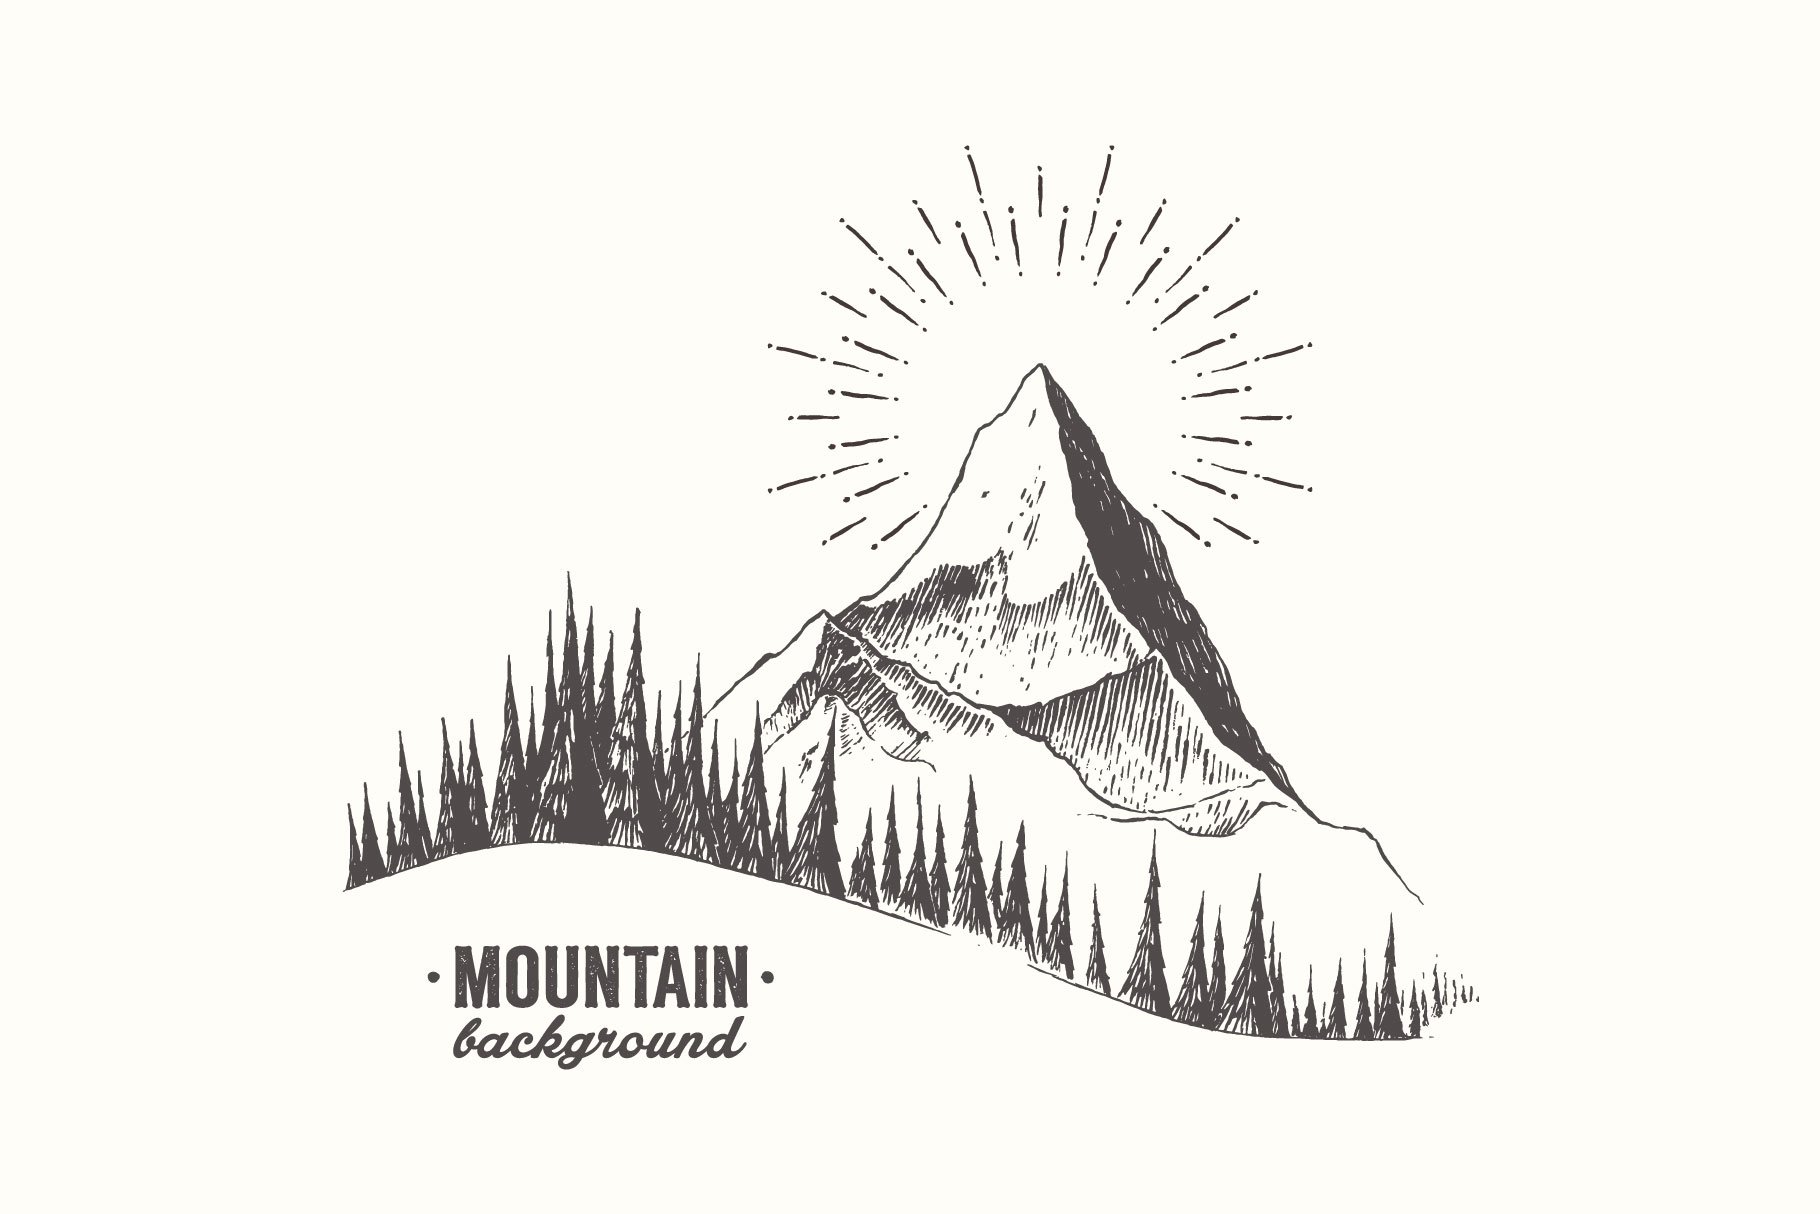 山峰素描插画 Mountain peak with fir